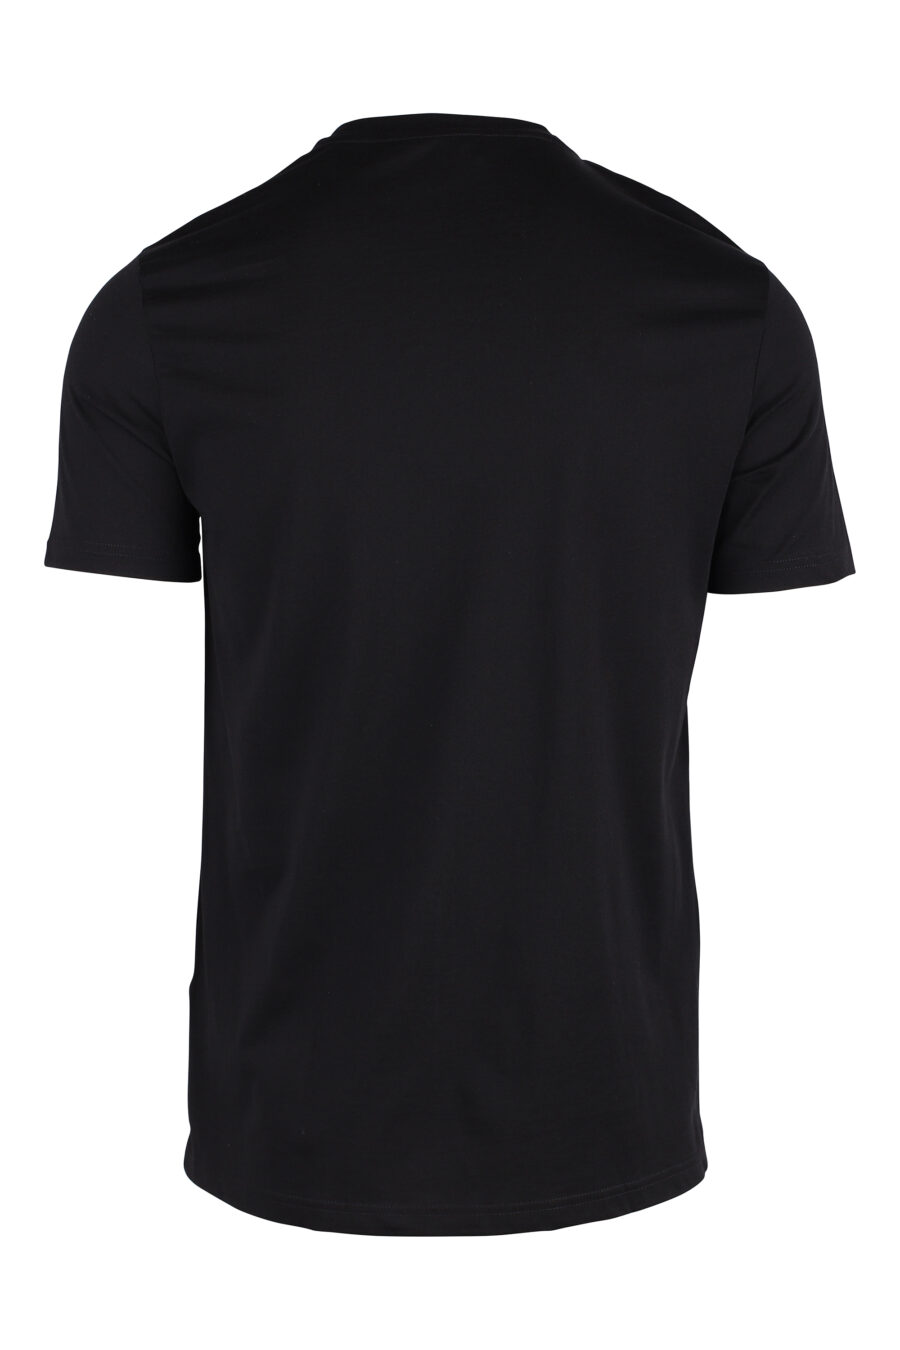 Camiseta negra con logo blanco bordado - IMG 8564